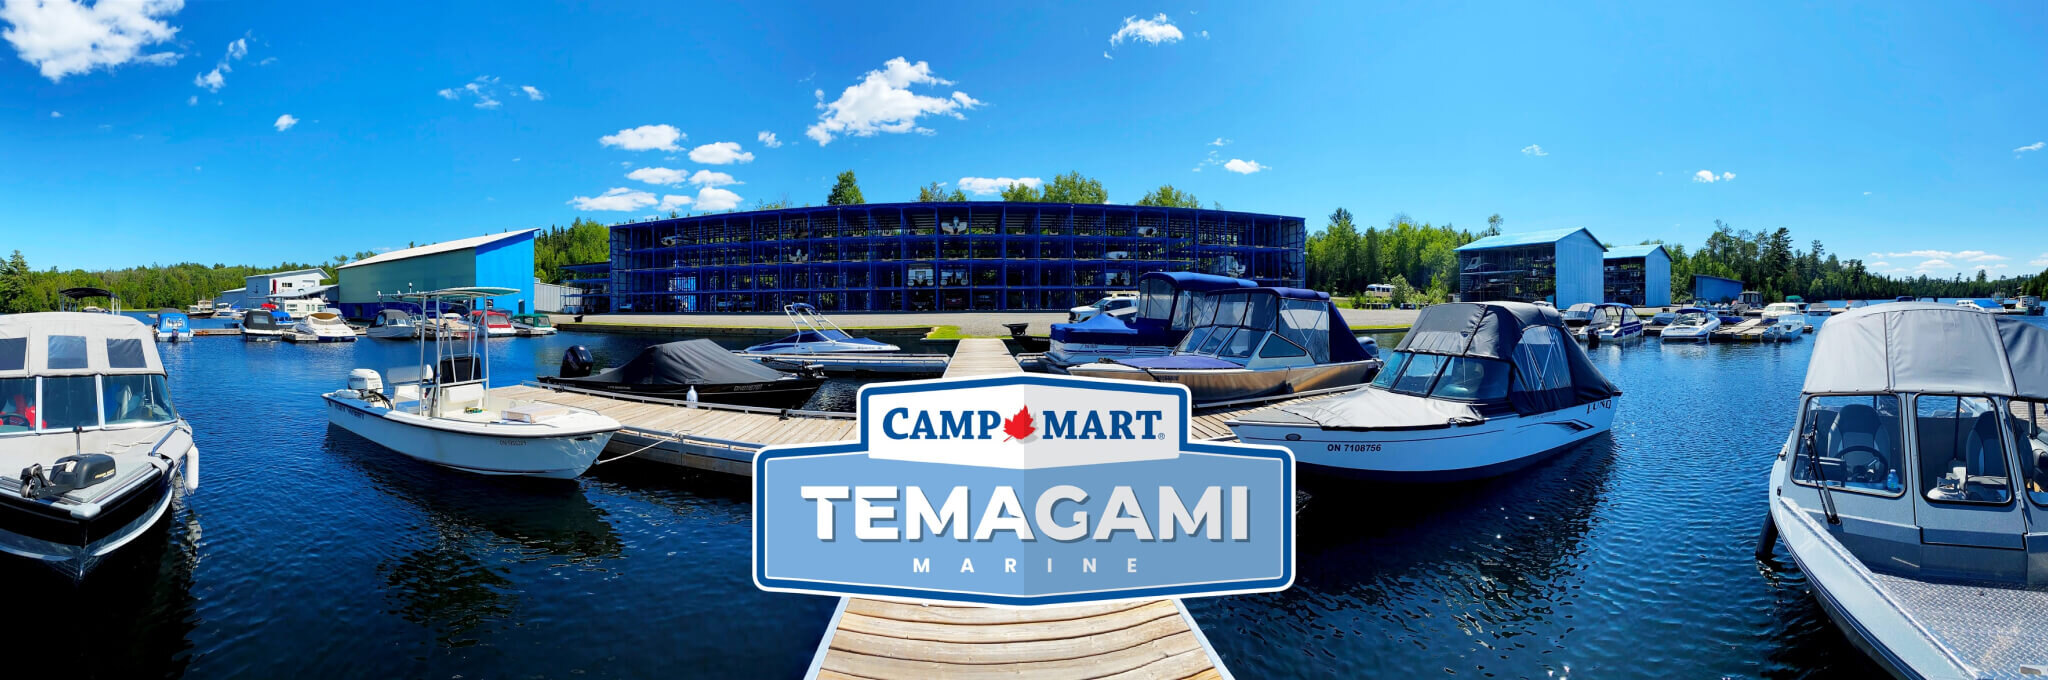 Temagami Marine Contact Us